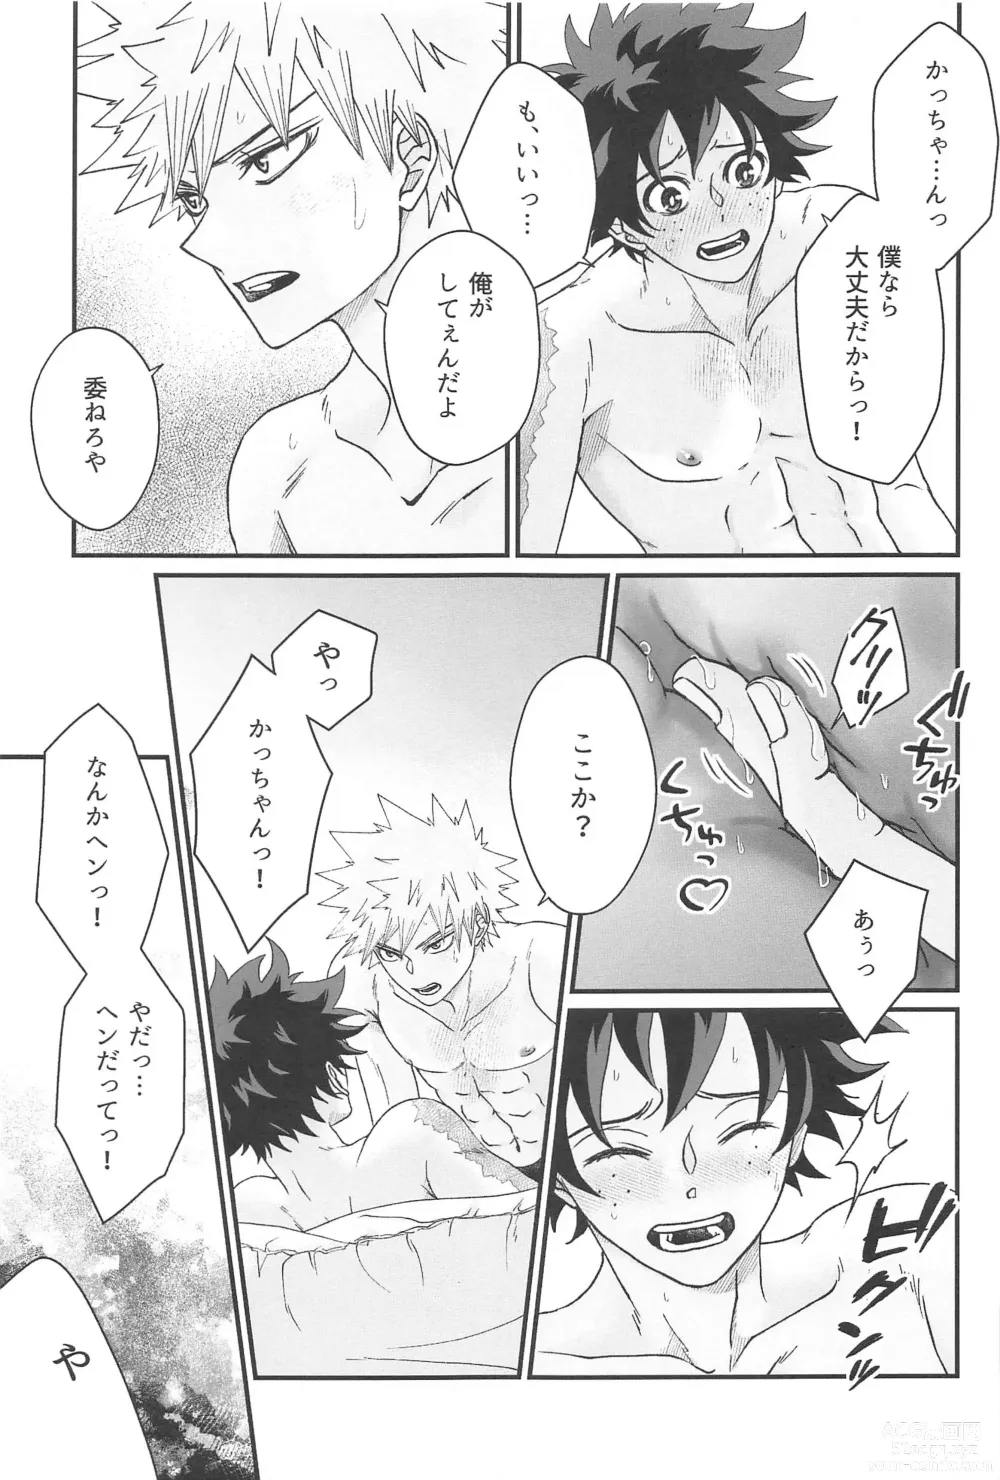 Page 26 of doujinshi 0.01